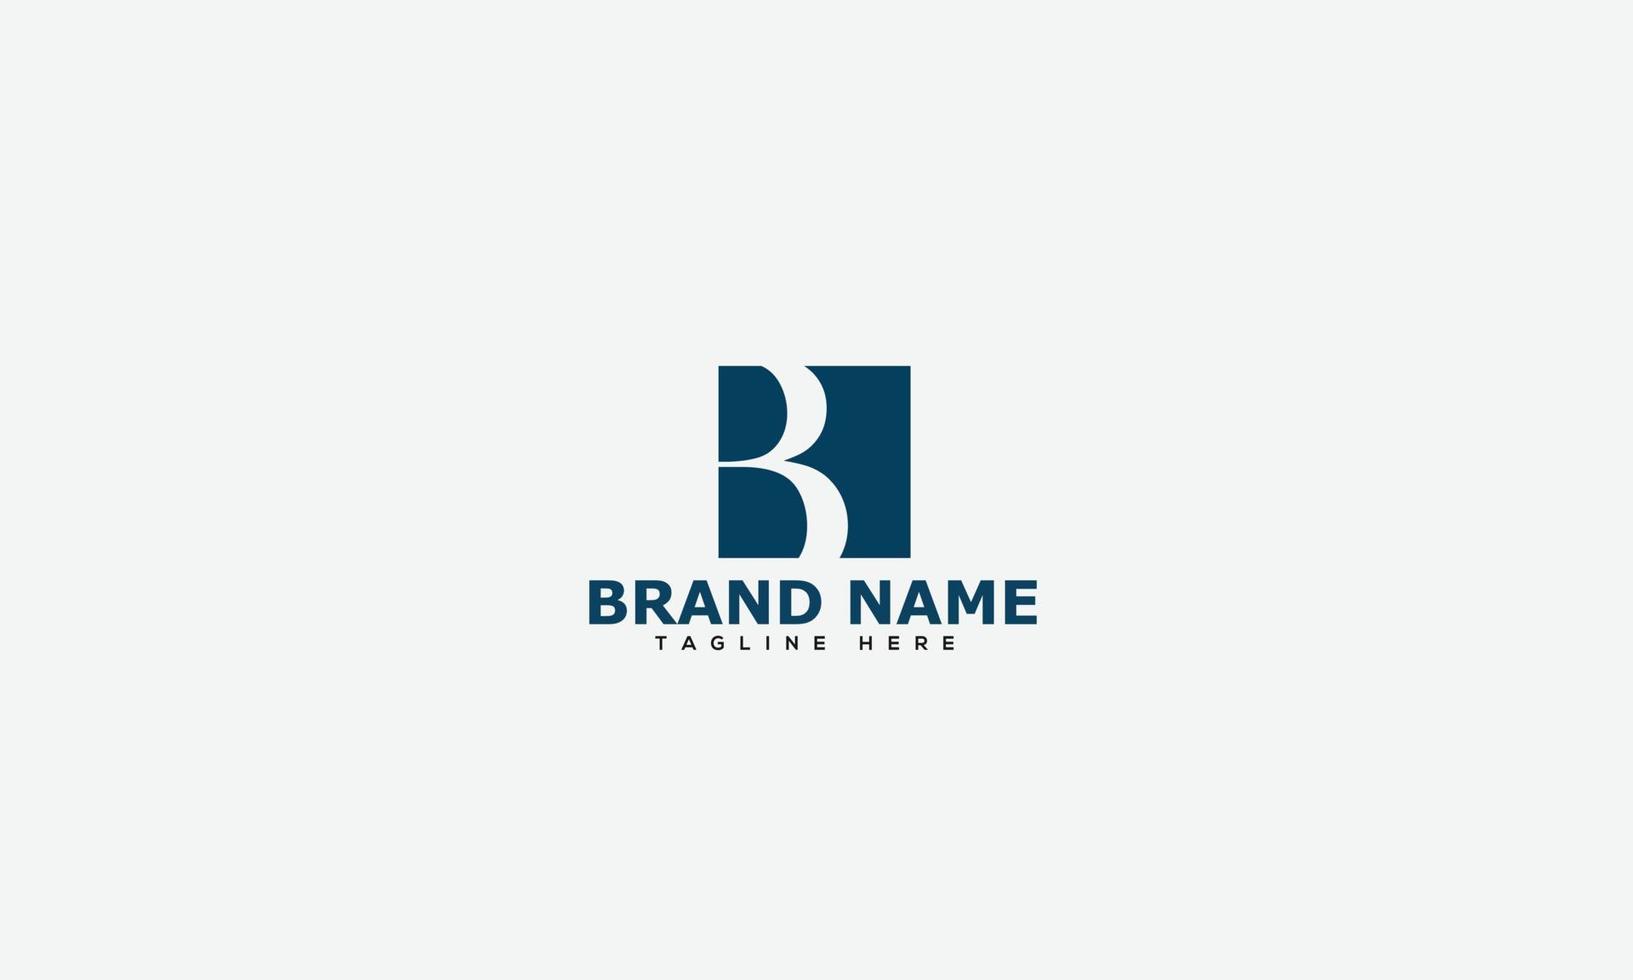 b elemento de branding gráfico de vetor de modelo de design de logotipo.